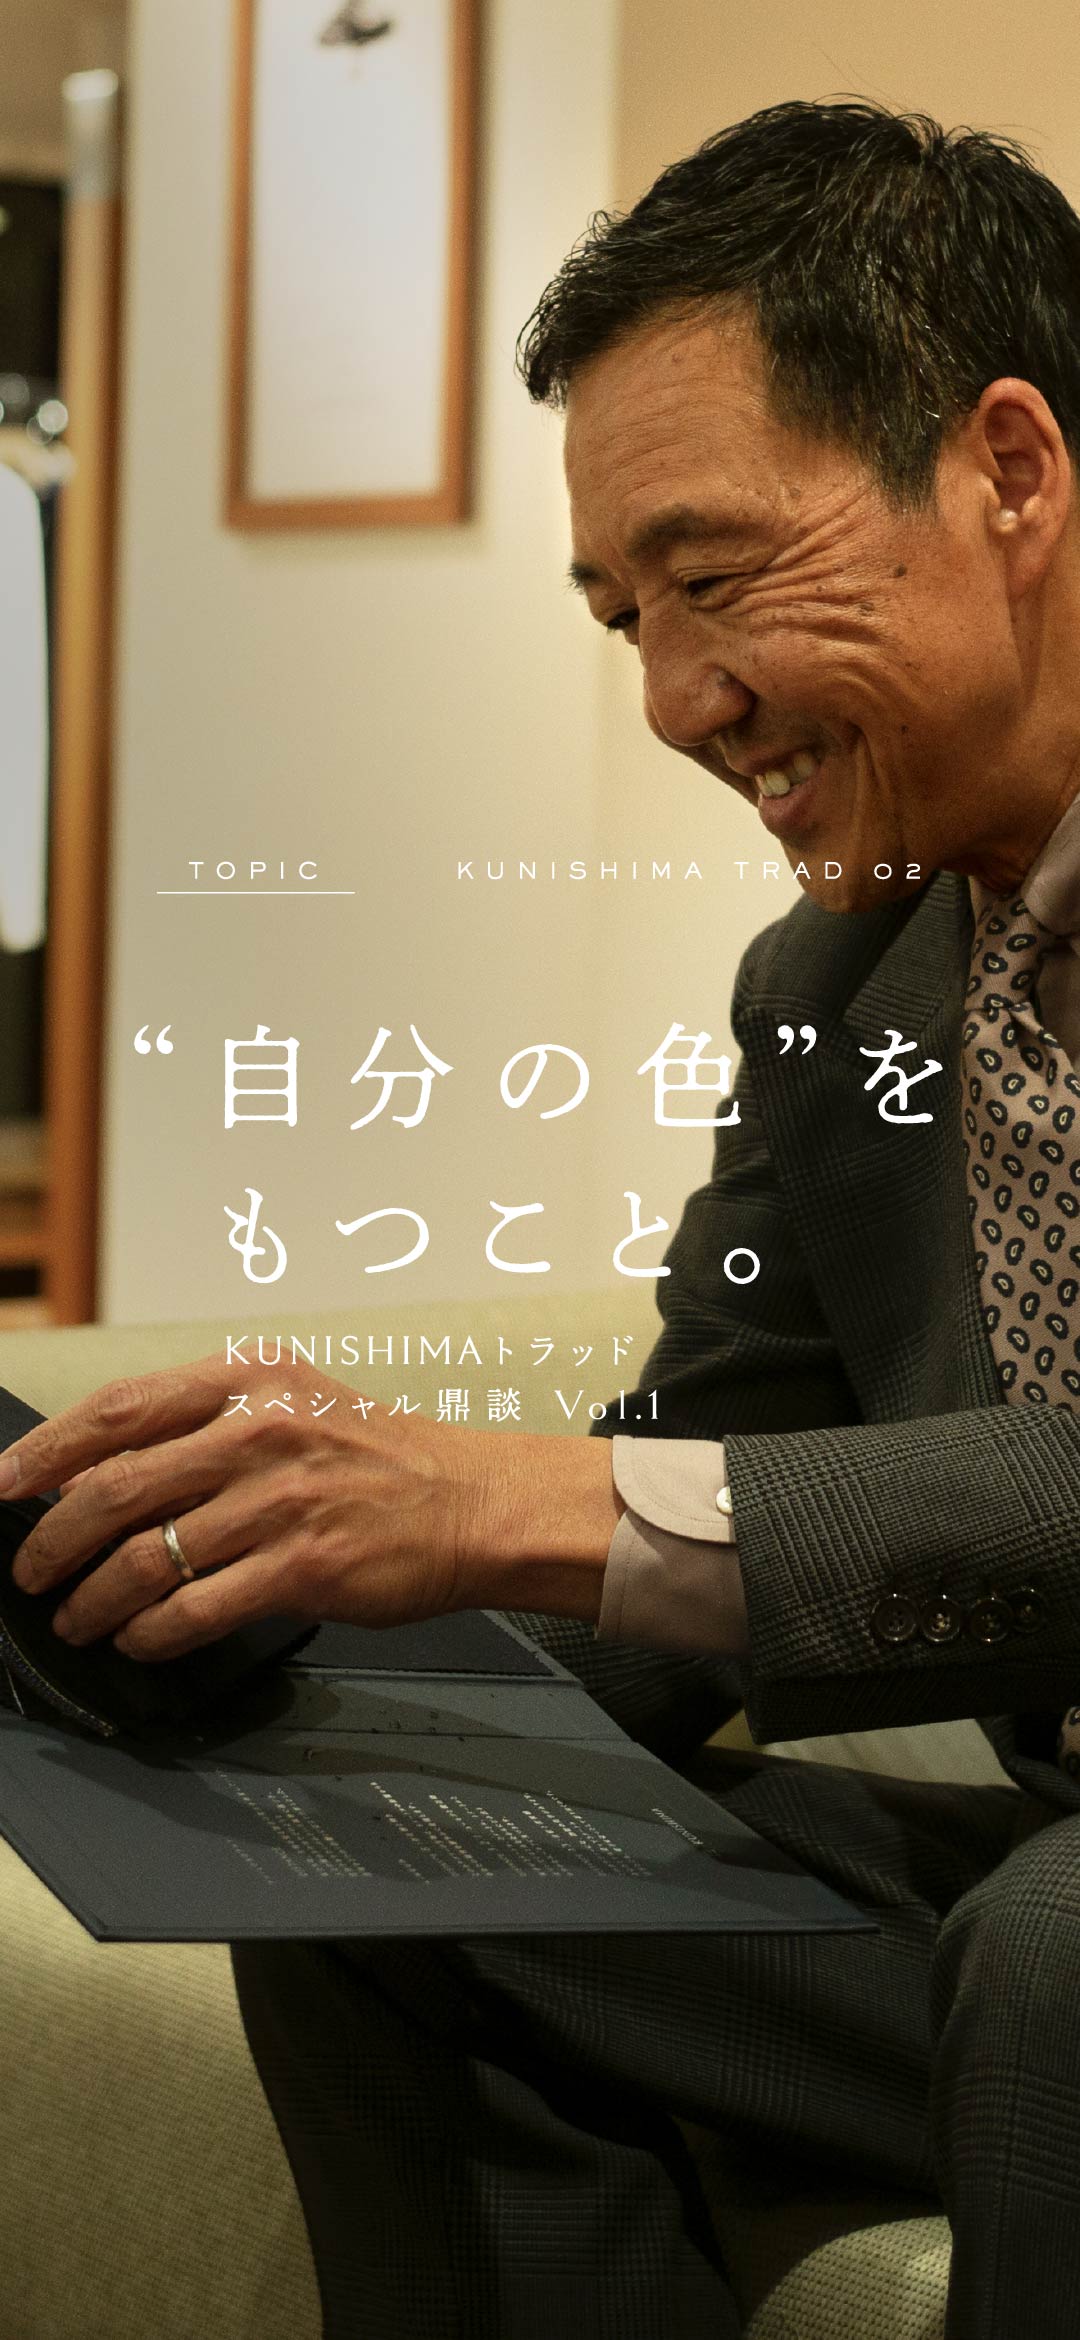 TOPIC KUNISHIMAトラッド 02